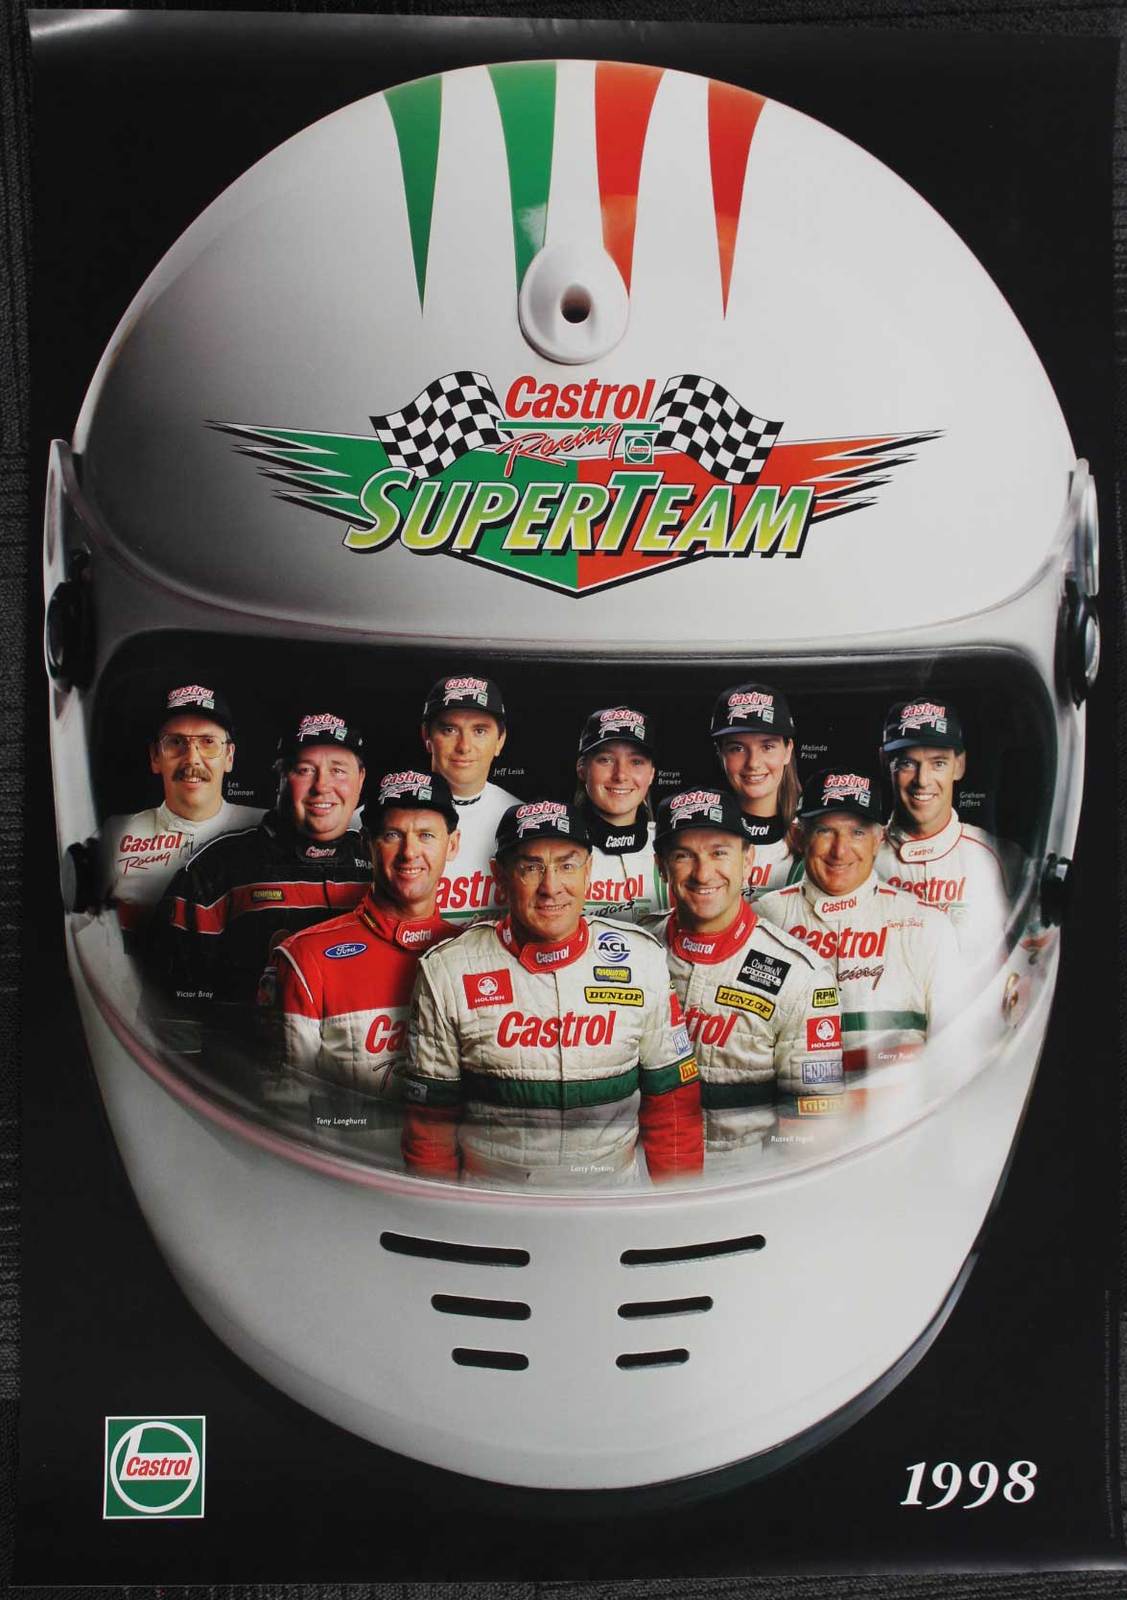 Castrol Racing Super Team Poster 97 Larry Perkins Russell Ingall Tony Longhurst